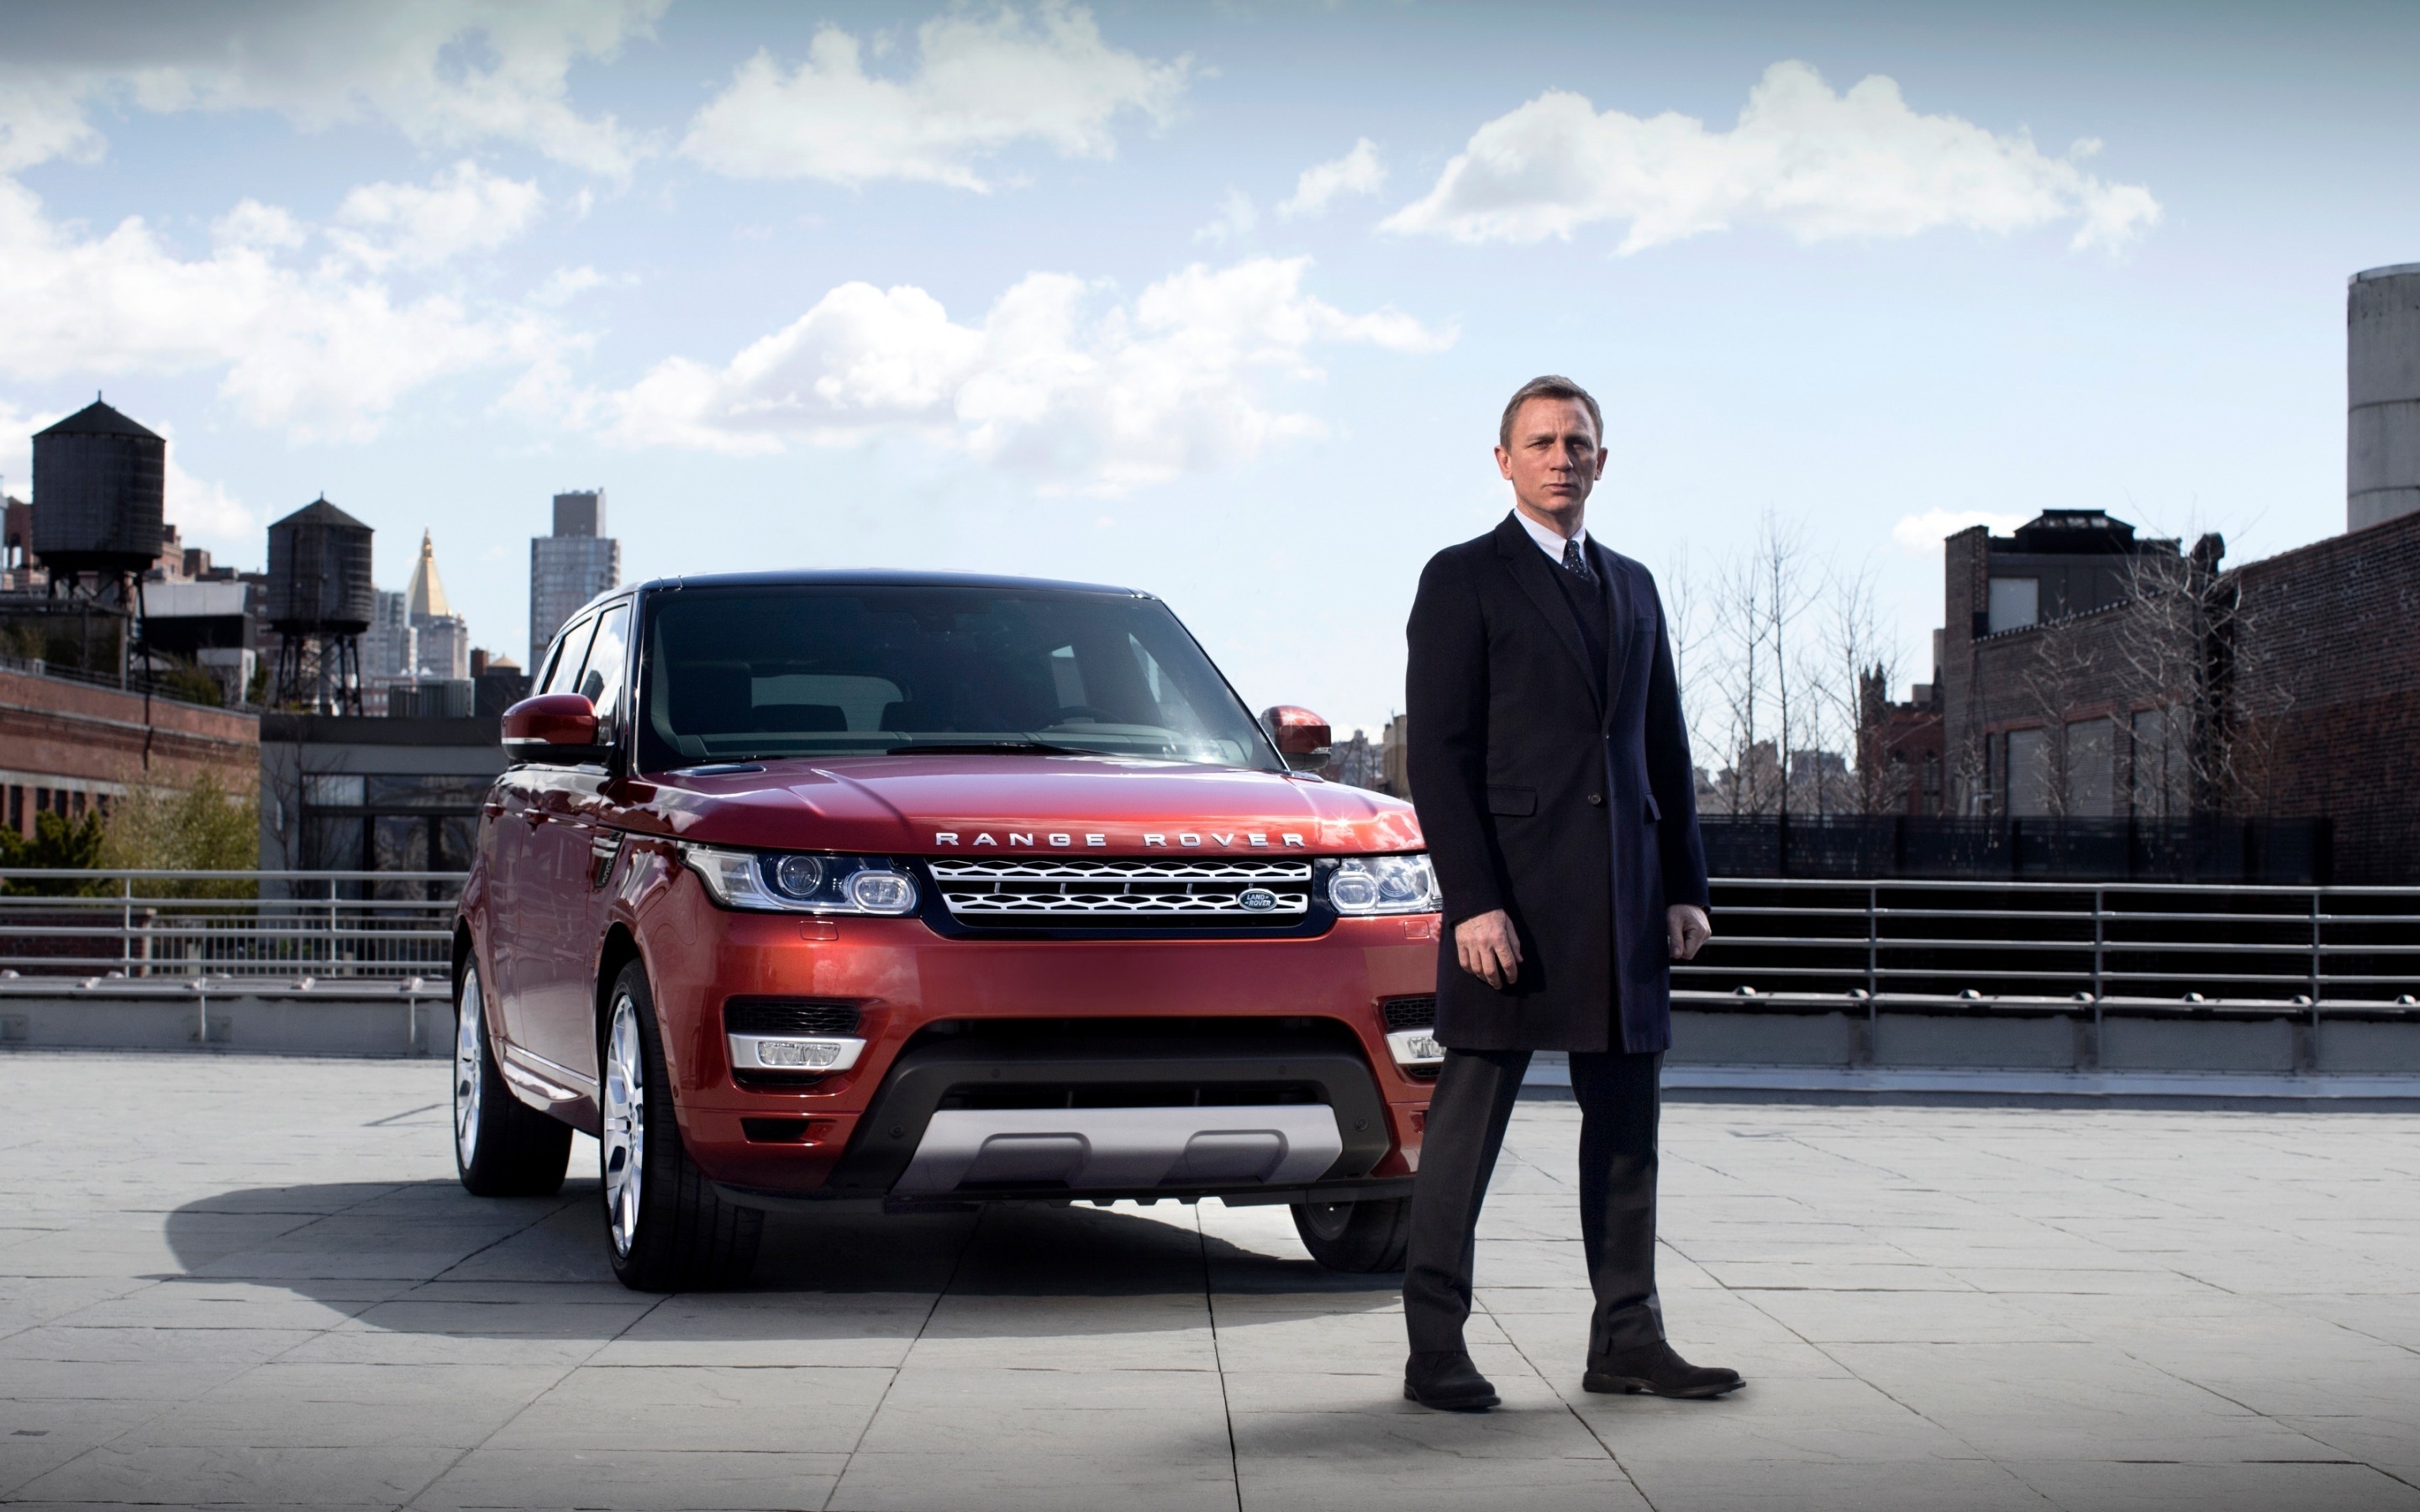 Daniel Craig and Range Rover for 2880 x 1800 Retina Display resolution